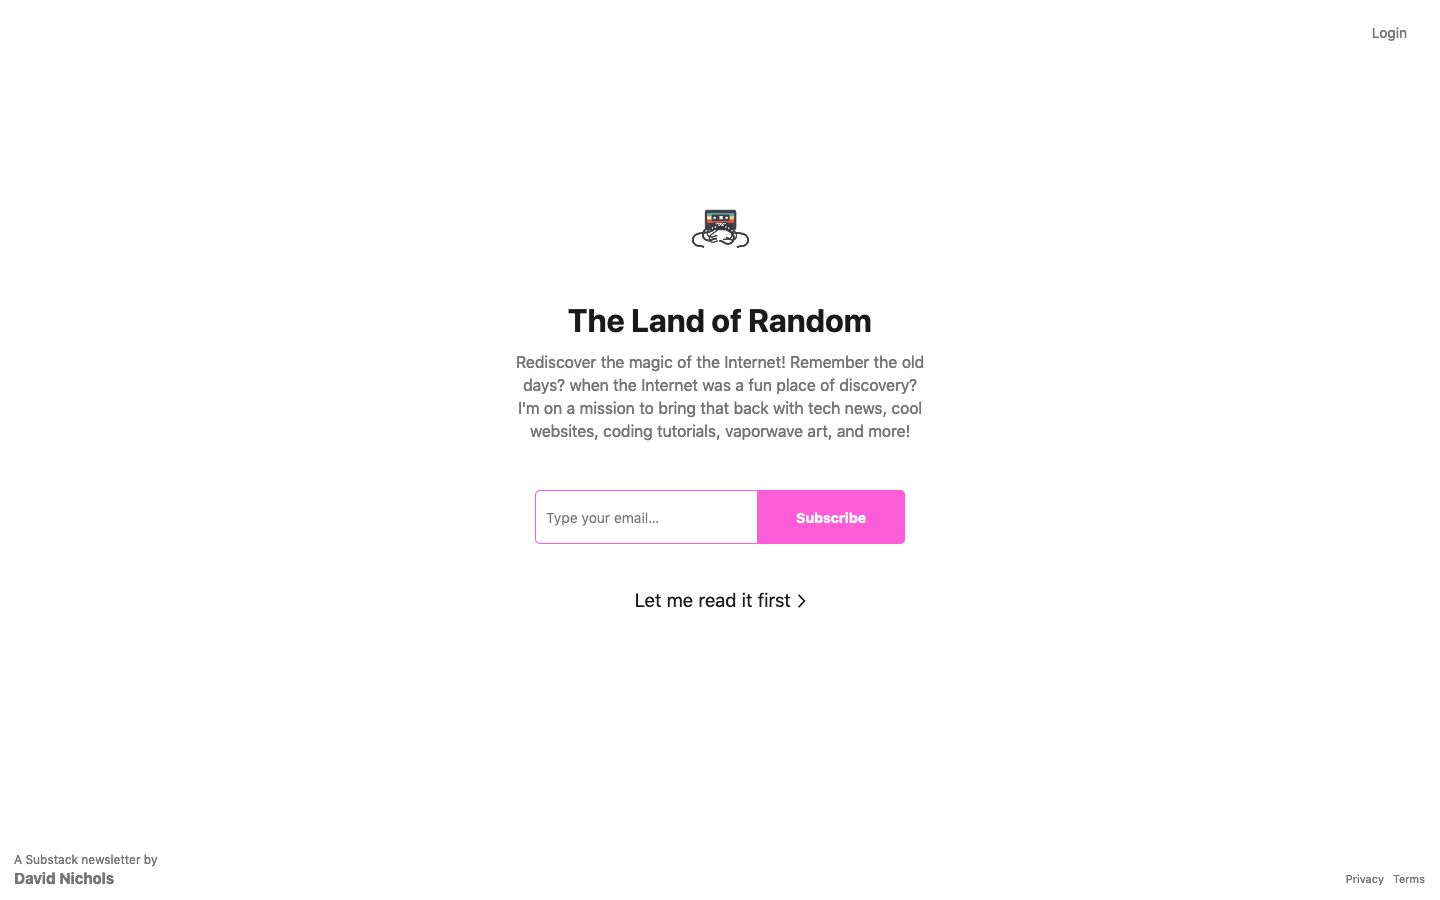 The Land of Random homepage